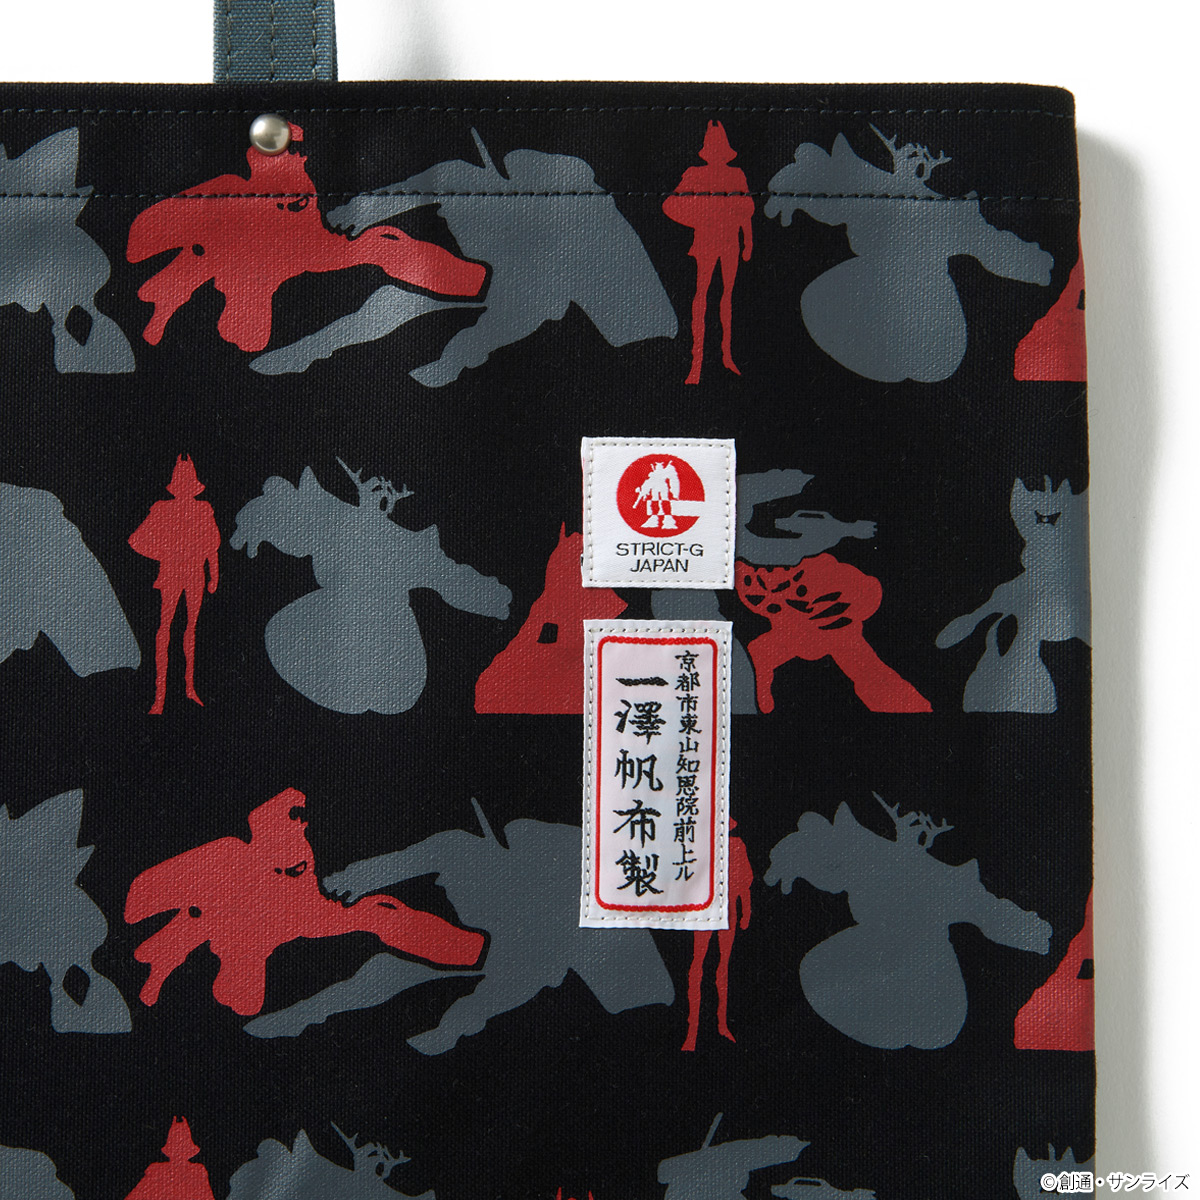 STRICT-G JAPAN 一澤帆布製『機動戦士ガンダム』トートバッグ 赤い彗星柄